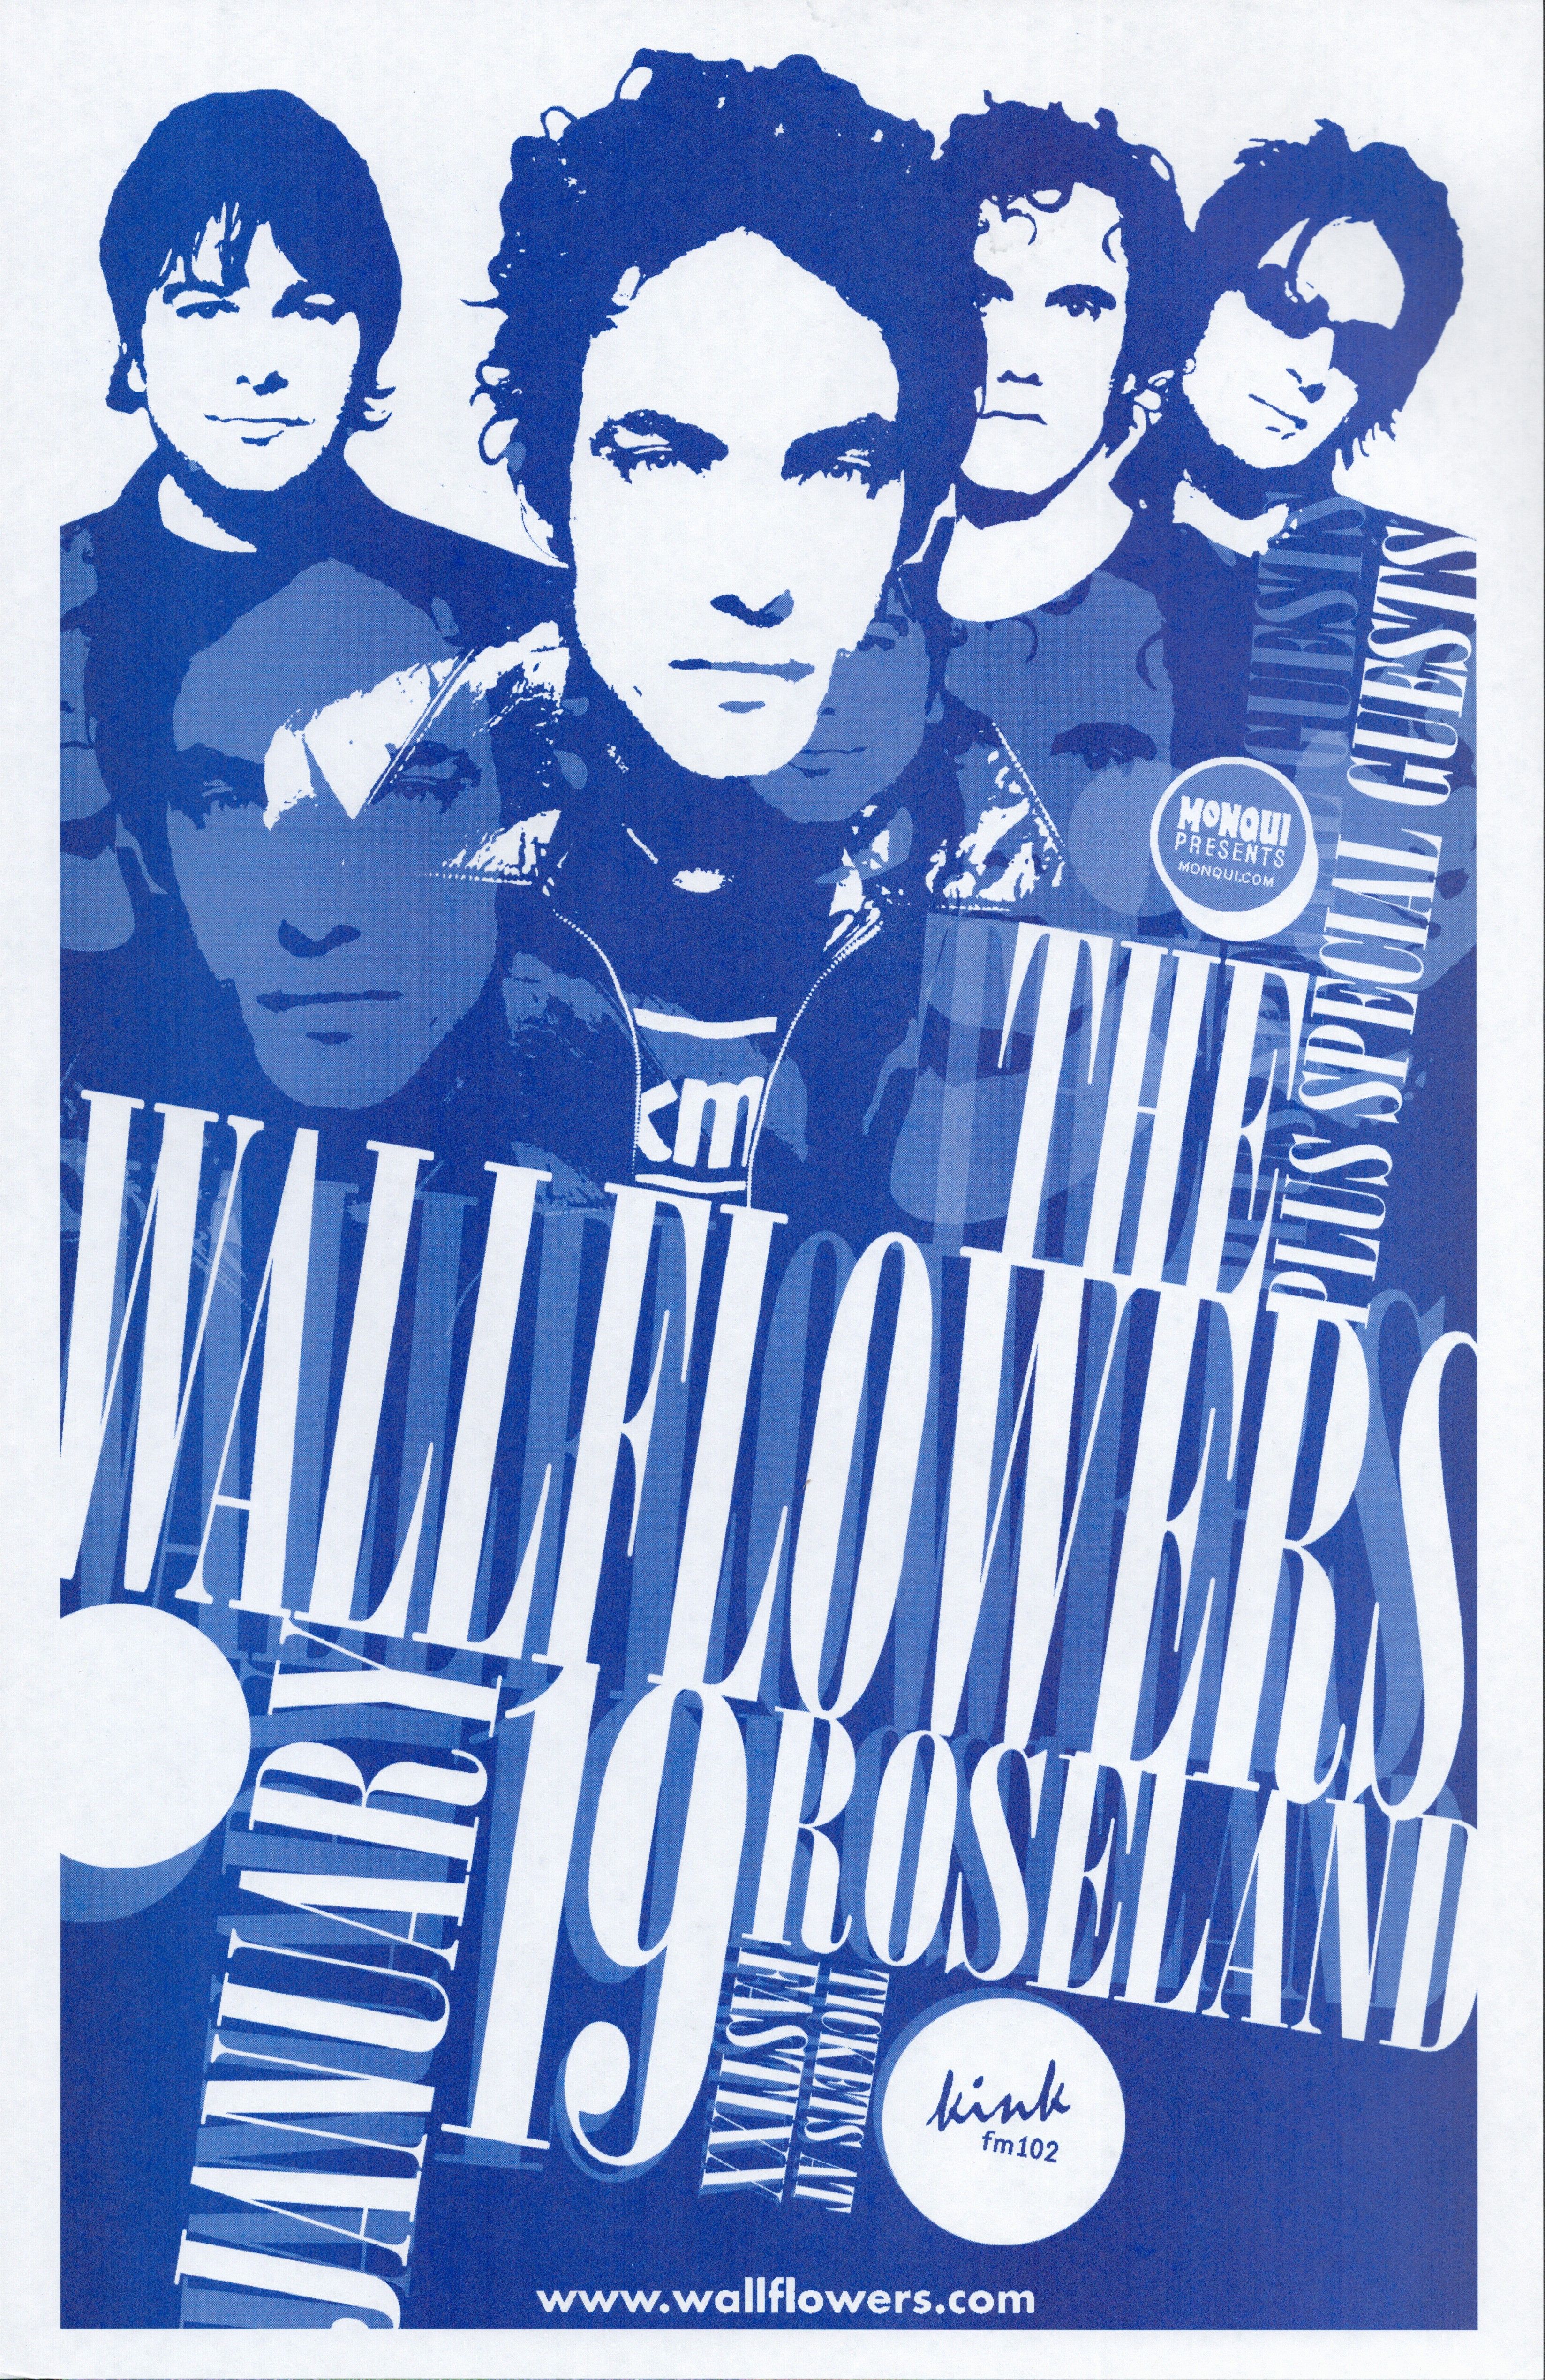 MXP-218.3 Wallflowers Roseland Theater 2002 Concert Poster